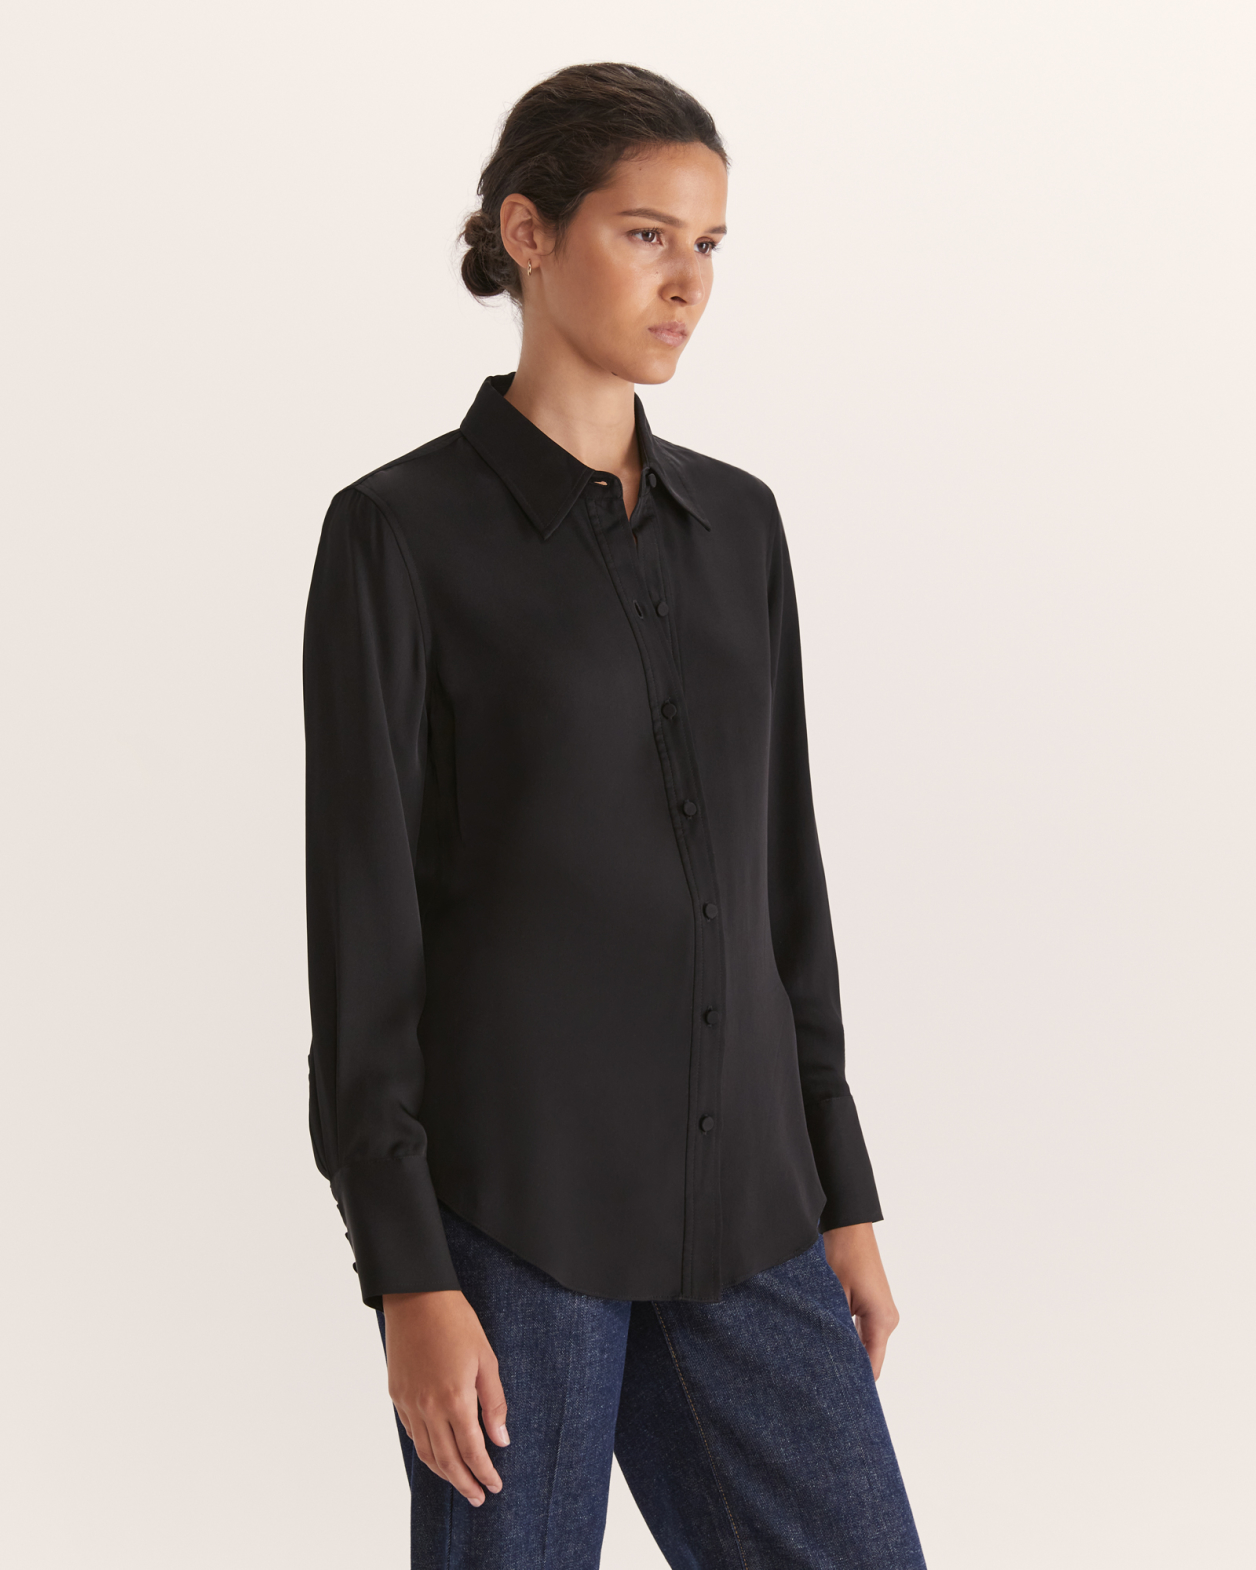 Sam Silk Cuff Shirt in BLACK